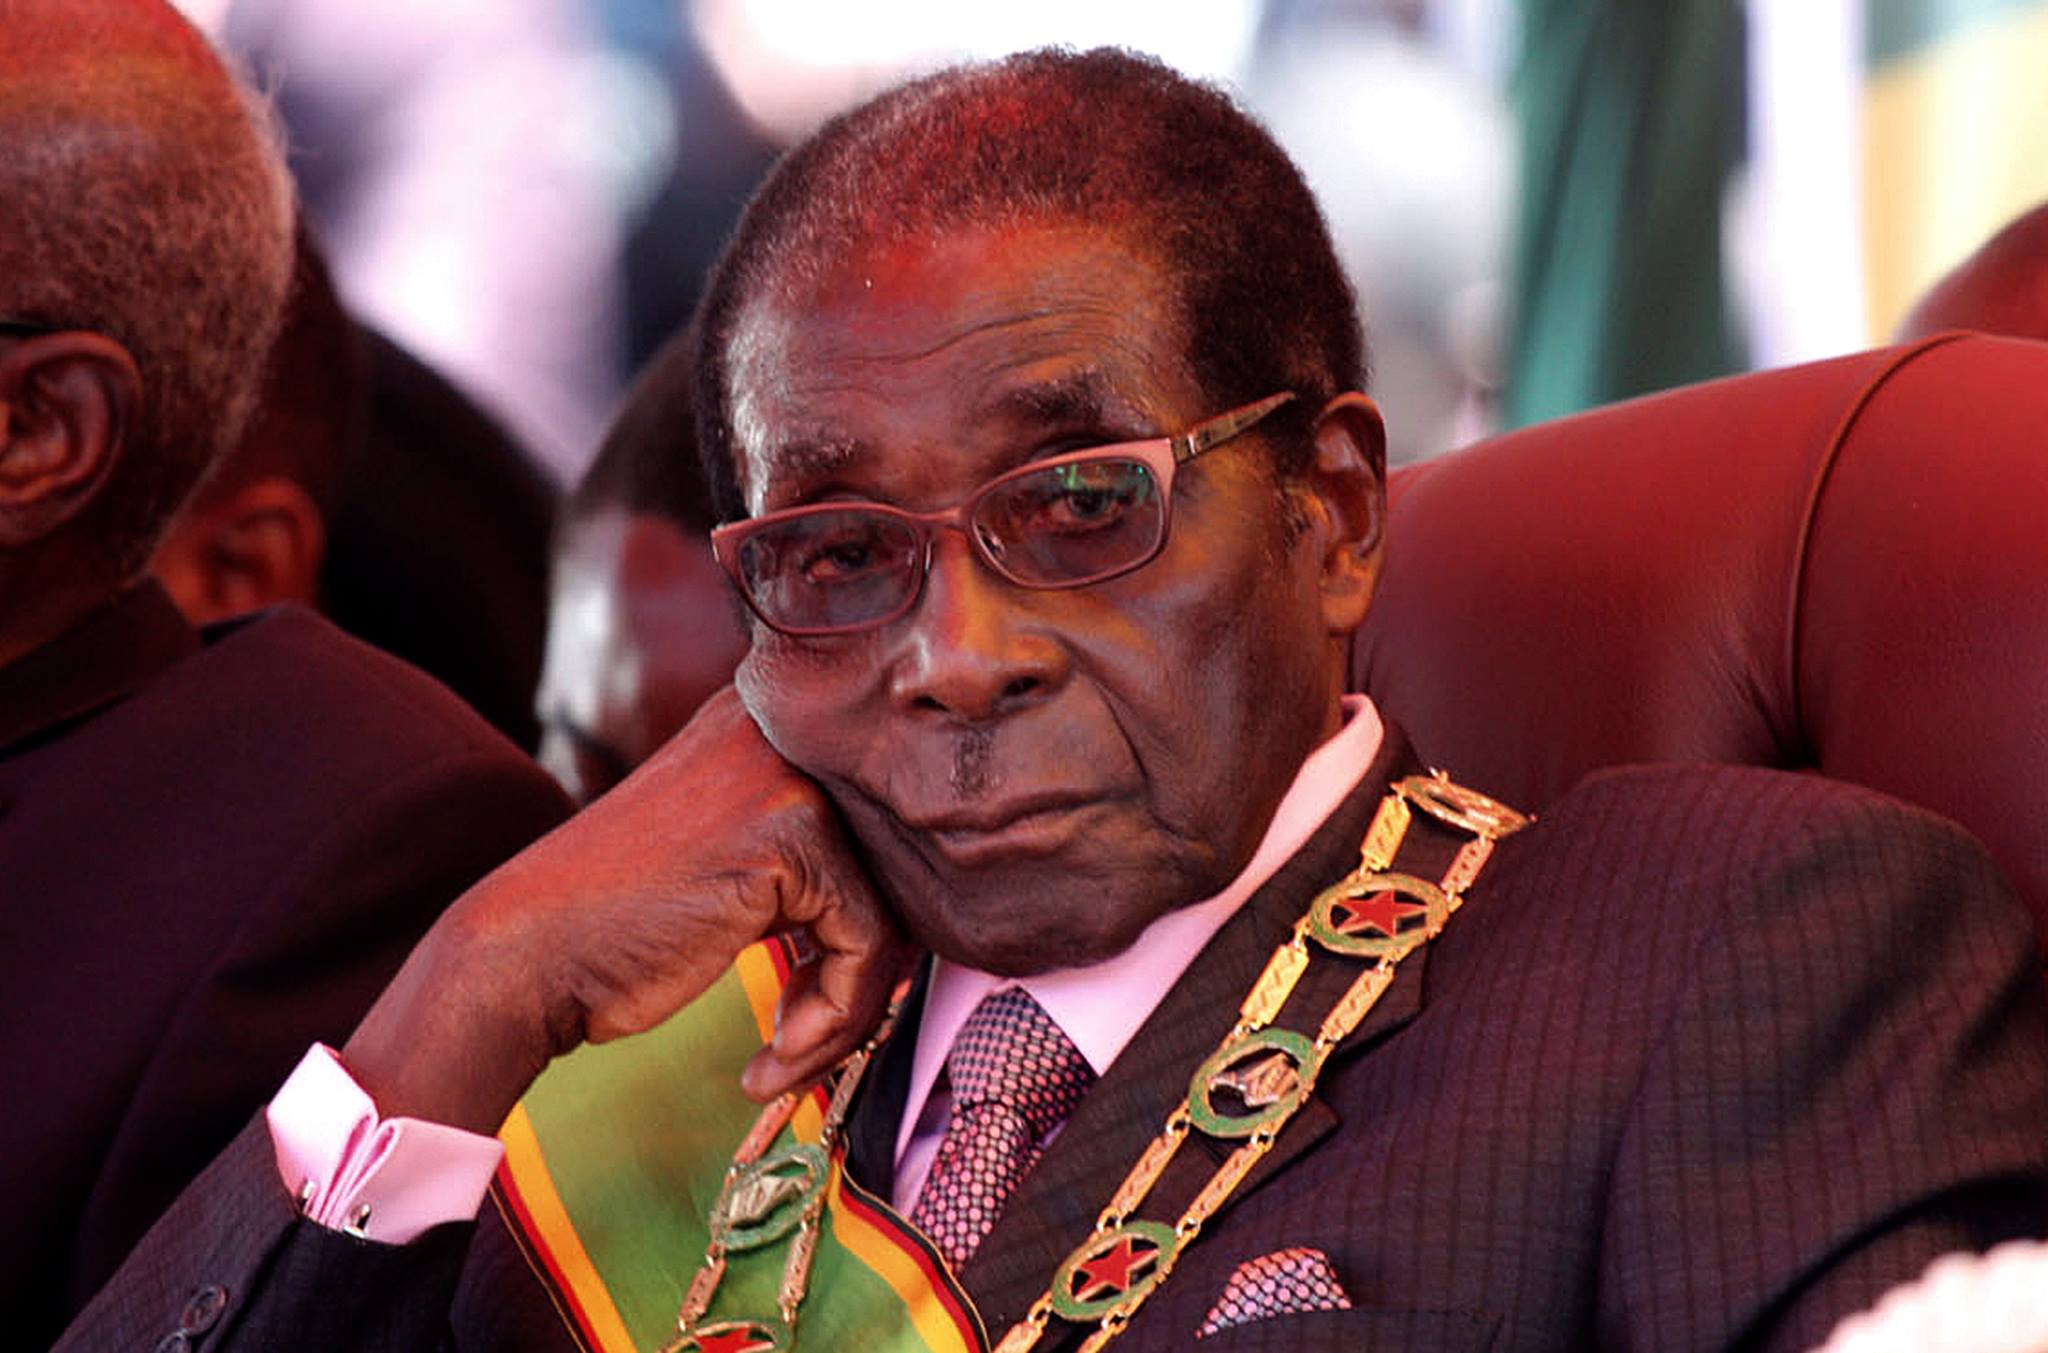 Reuters - რობერტ მუგაბე მმართველმა პარტიამ ზიმბაბვეს პრეზიდენტის პოსტიდან გადადგომაზე დაითანხმა